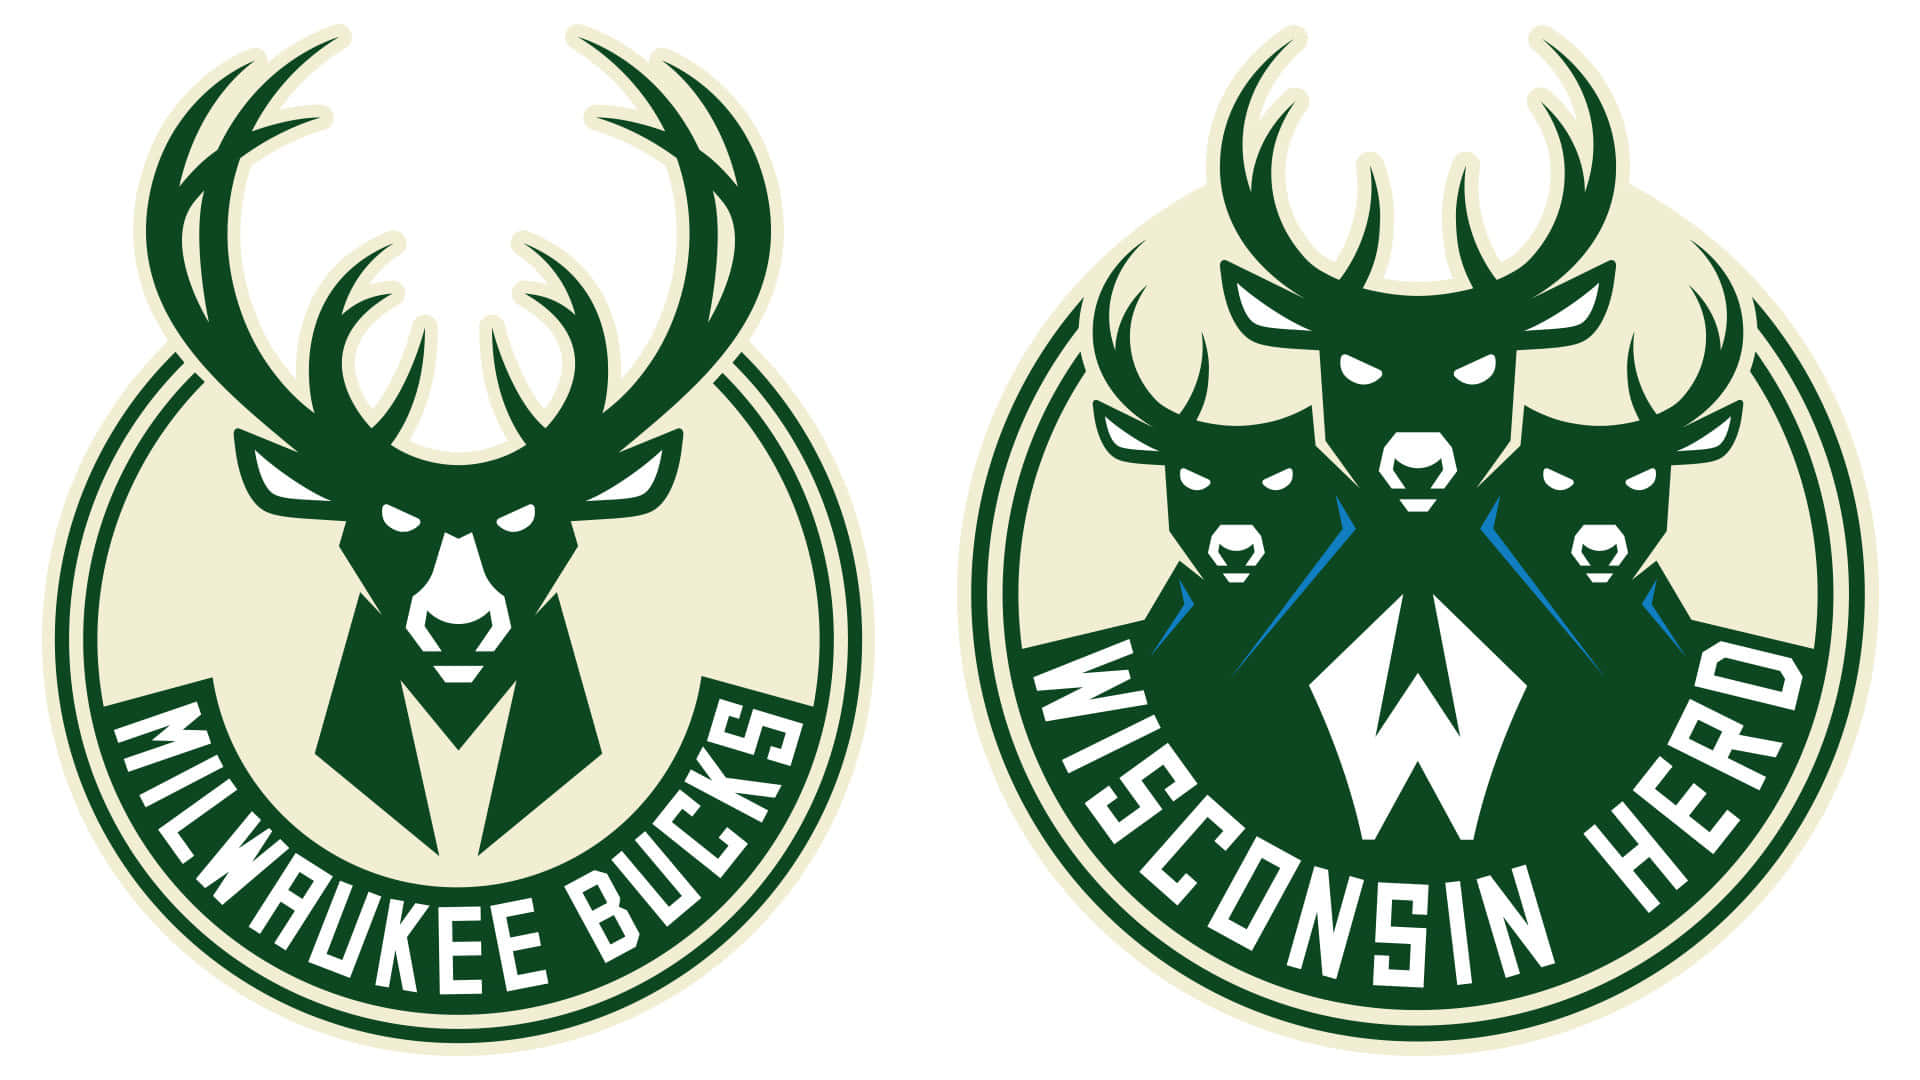 The Official Logo of the Milwaukee Bucks Wallpaper